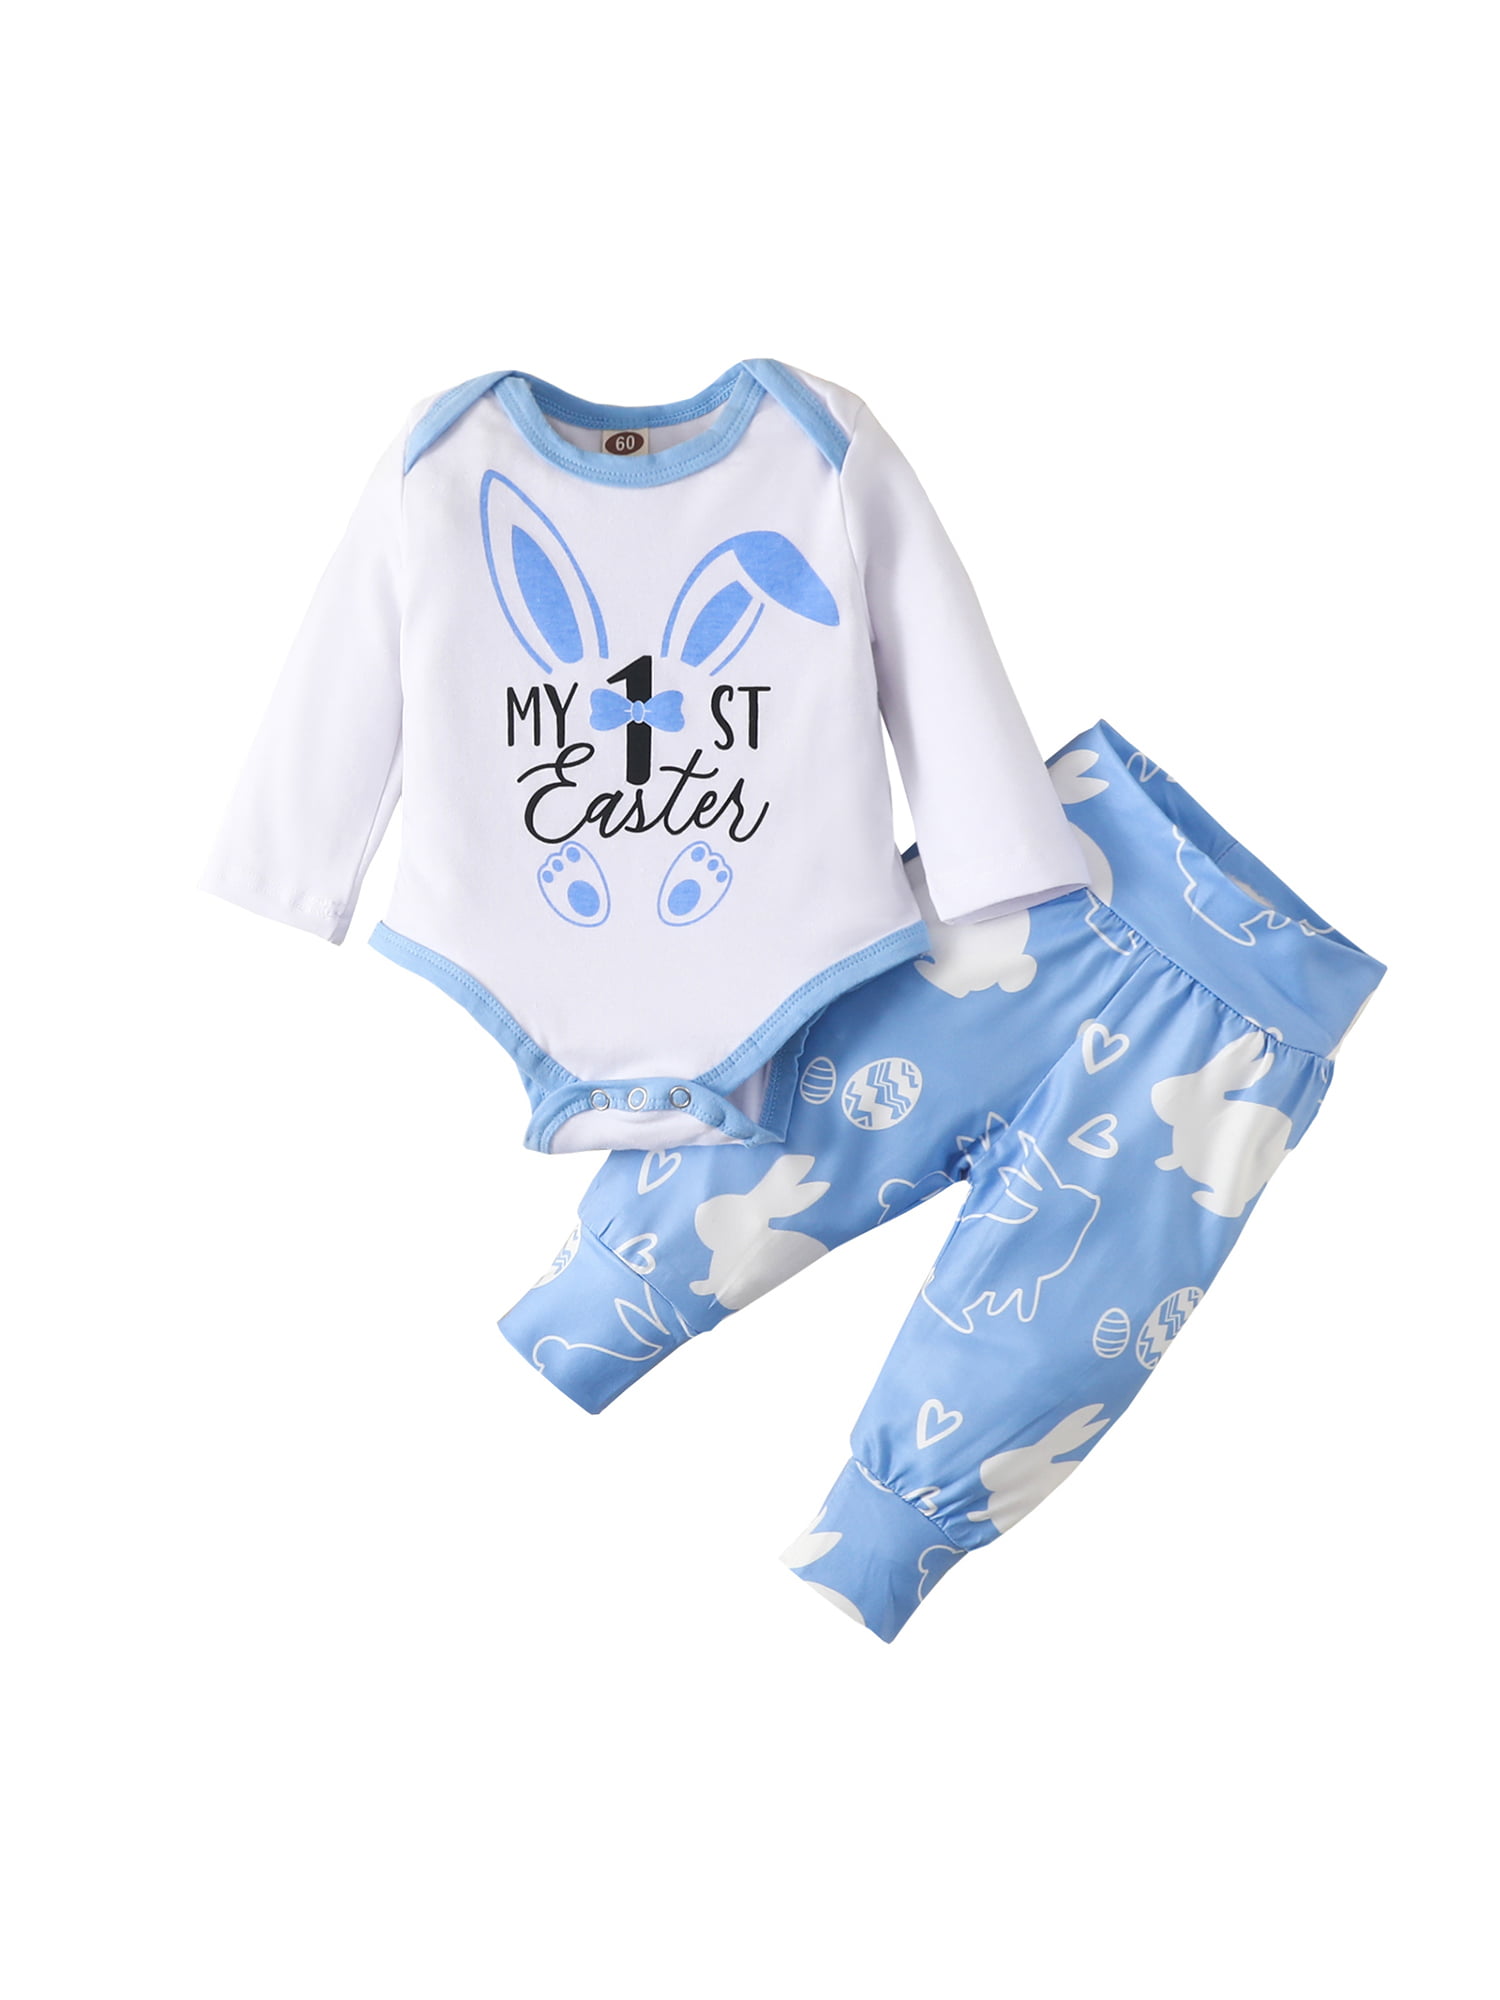 Cute Newborn Toddler Baby Girls Boys Summer Romper Short Sleeve Easter Onesie Pajama Jumpsuit Outfit 0-18 Months